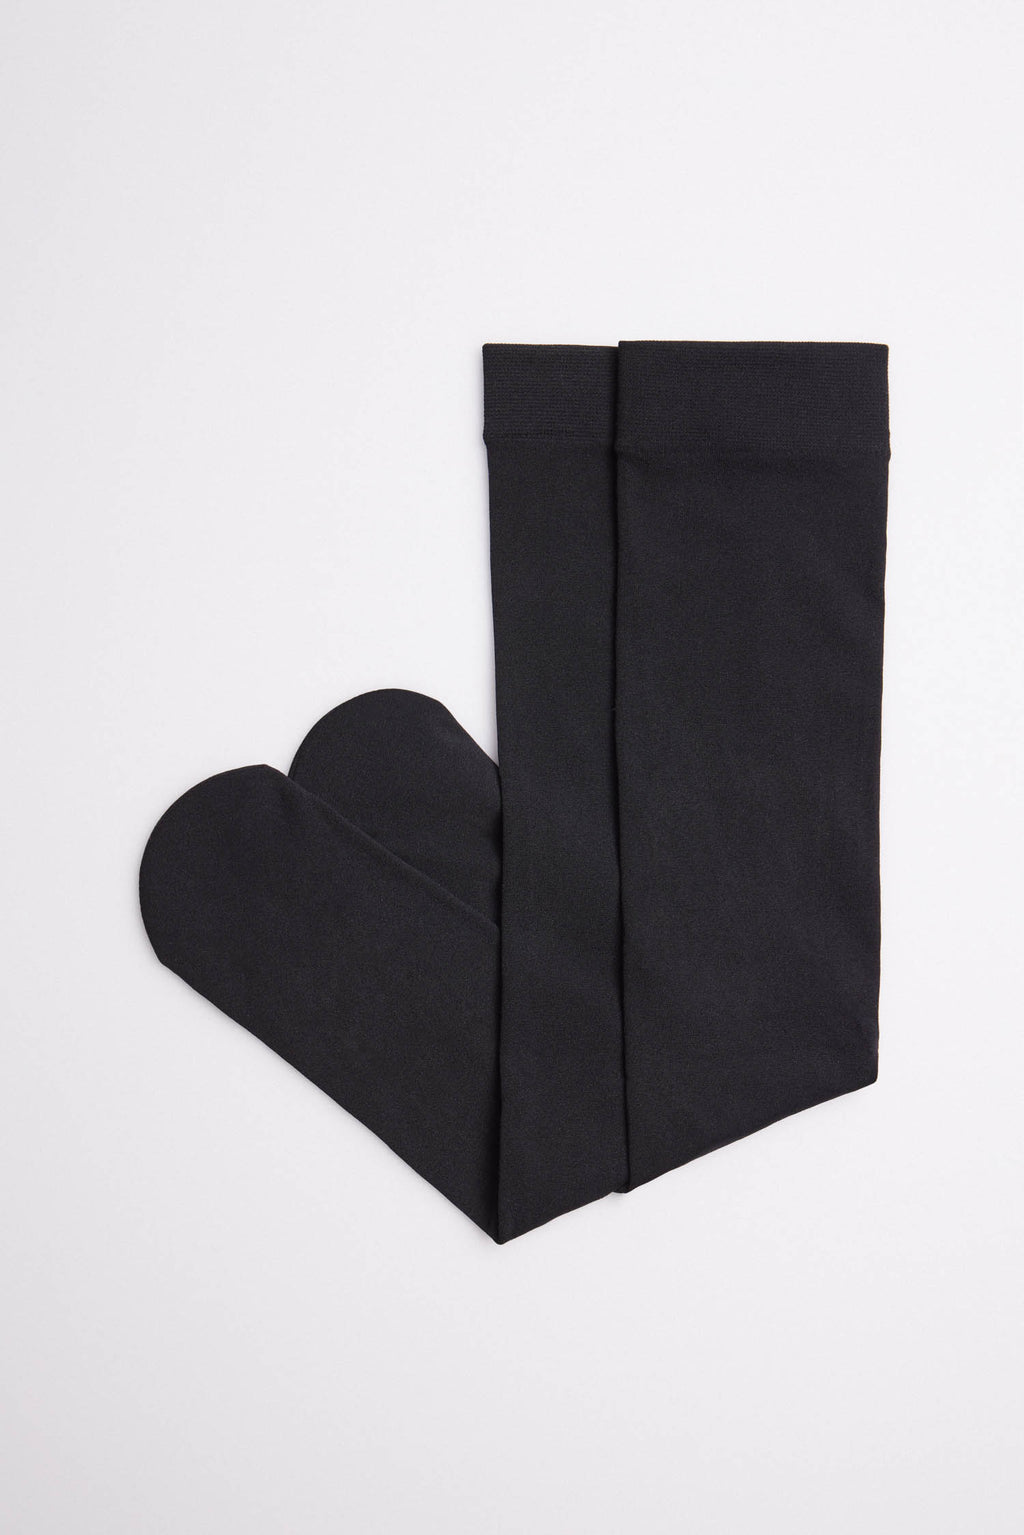 Pack de 2 pares de calcetines térmicos - NEGRO - Kiabi - 7.00€